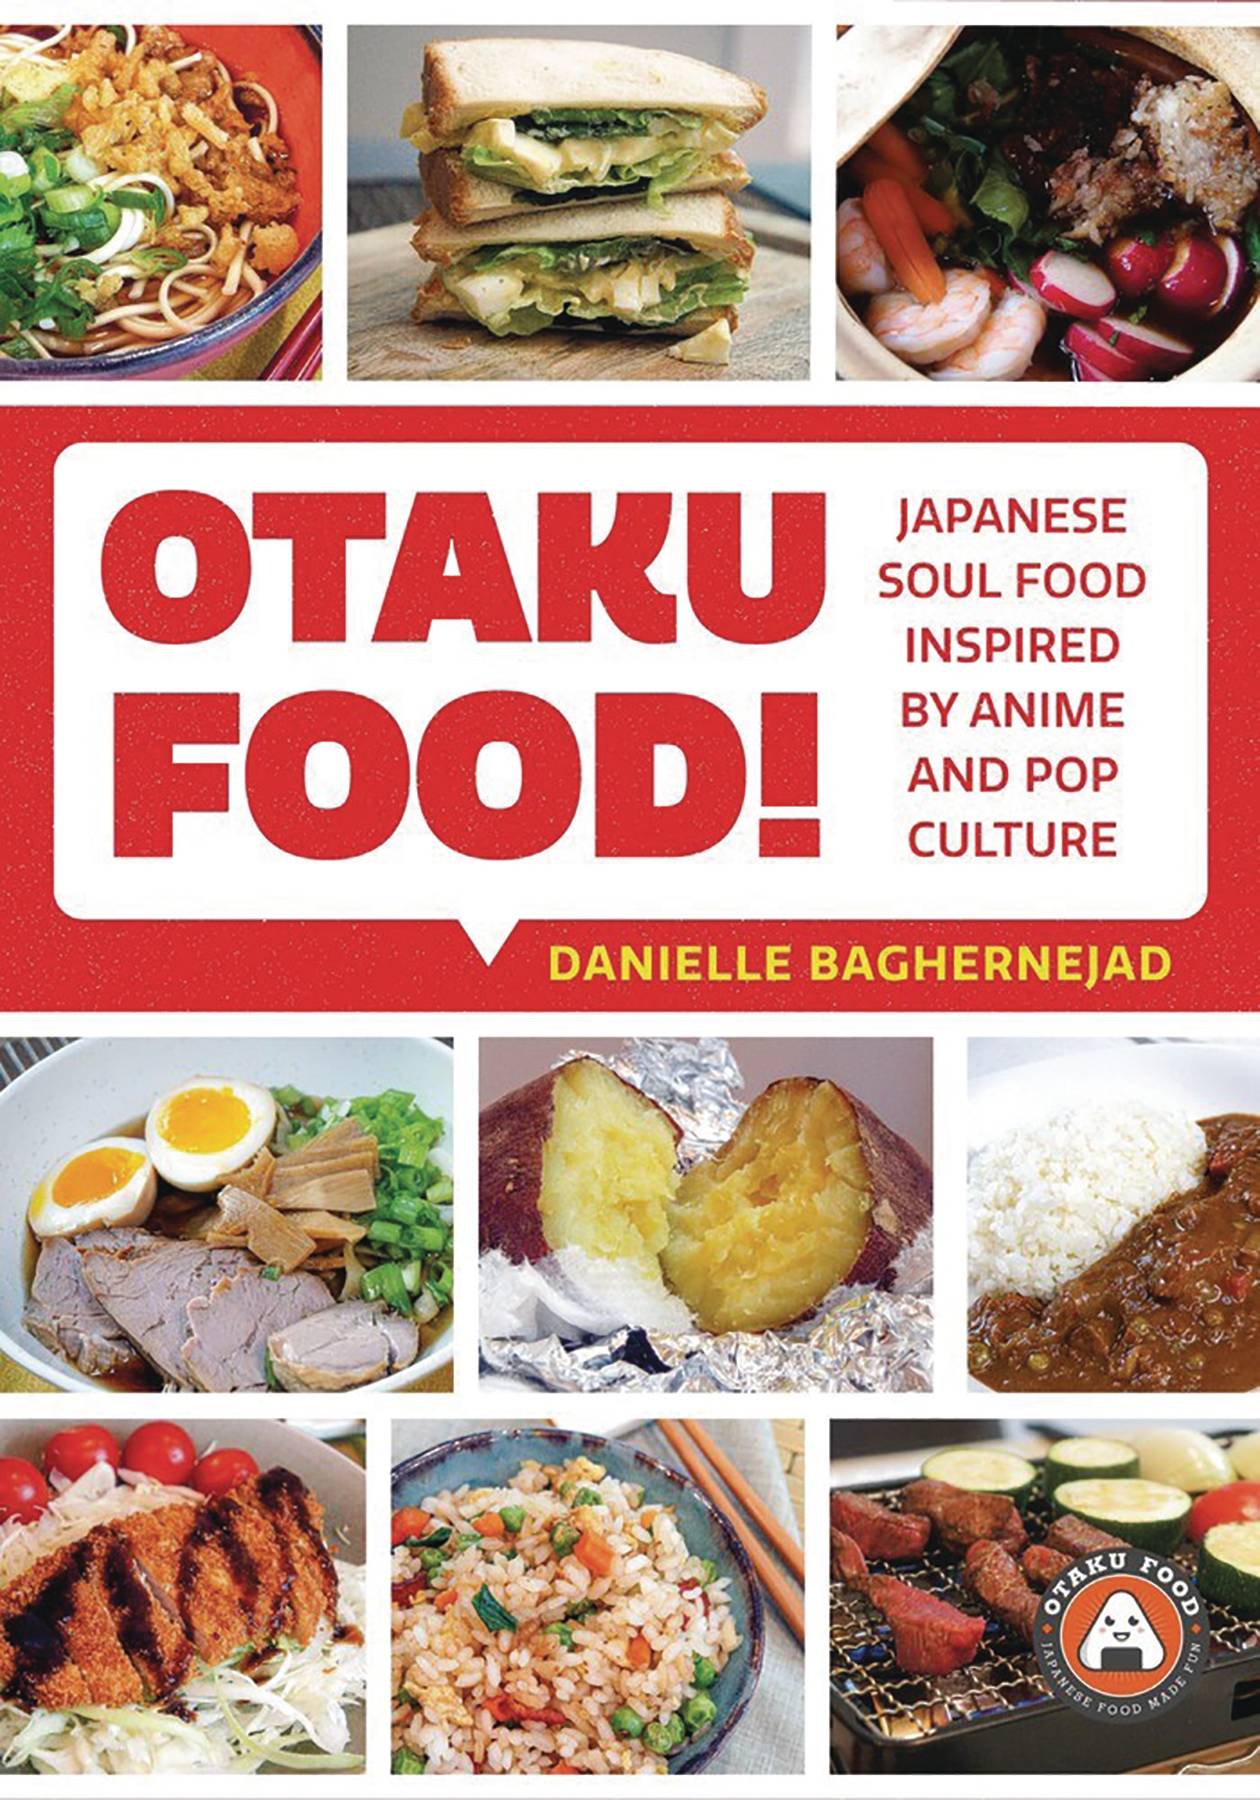 OTAKU FOOD JAPANESE SOUL FOOD INSPIRED BY ANIME POP CULTURE